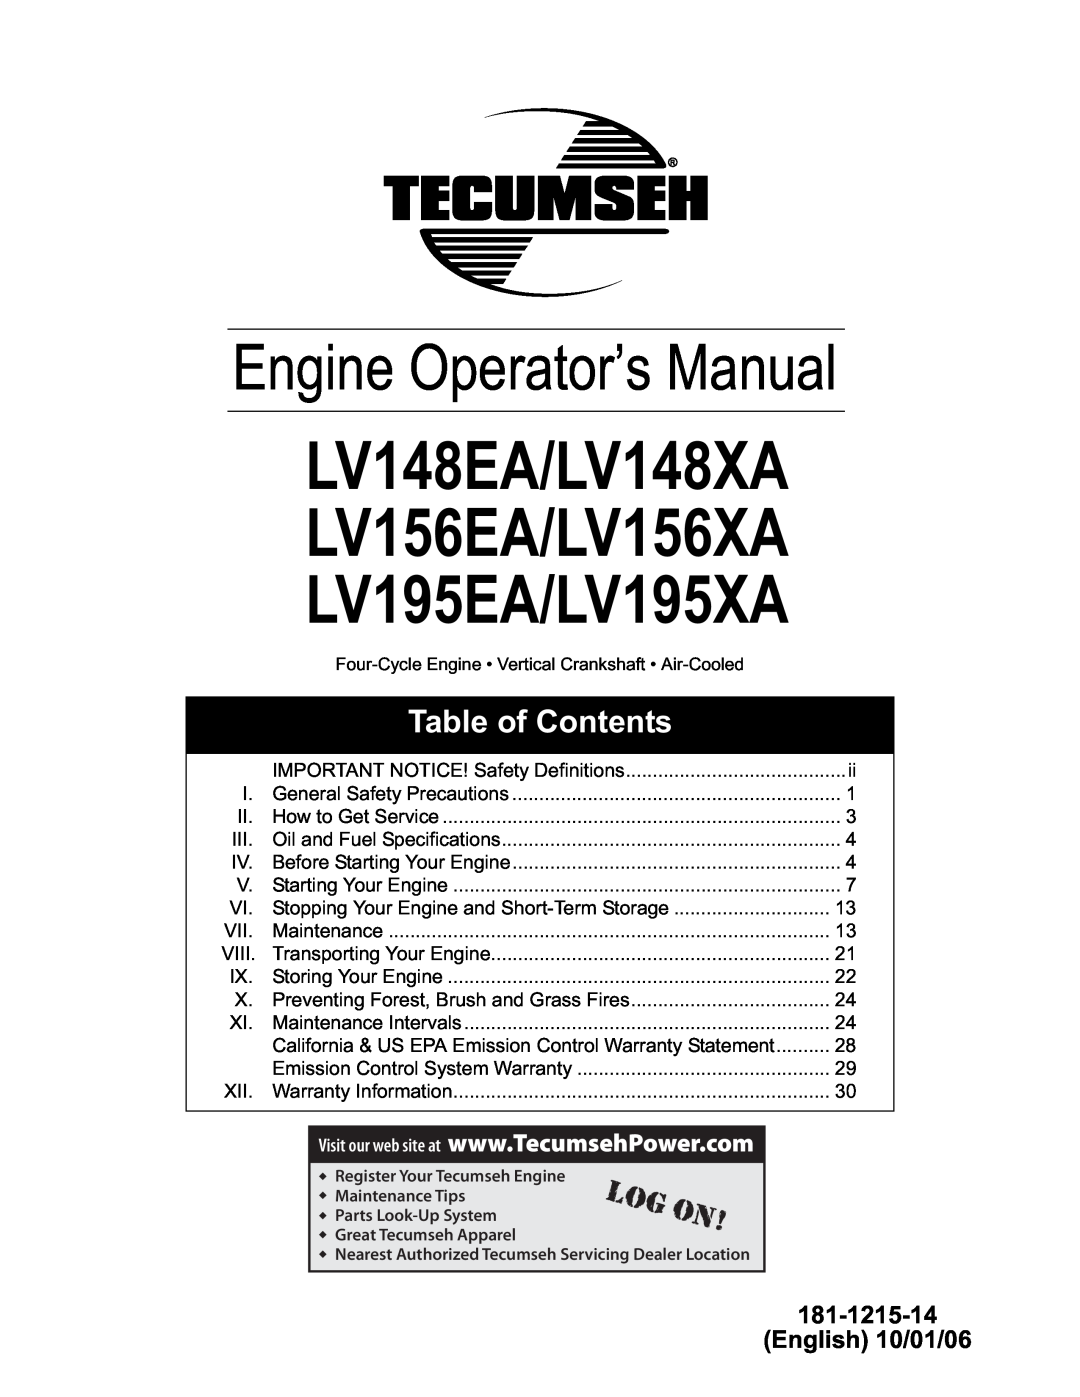 Tecumseh specifications English 10/01/06, LV148EA/LV148XA, LV156EA/LV156XA, LV195EA/LV195XA, Engine Operator’s Manual 